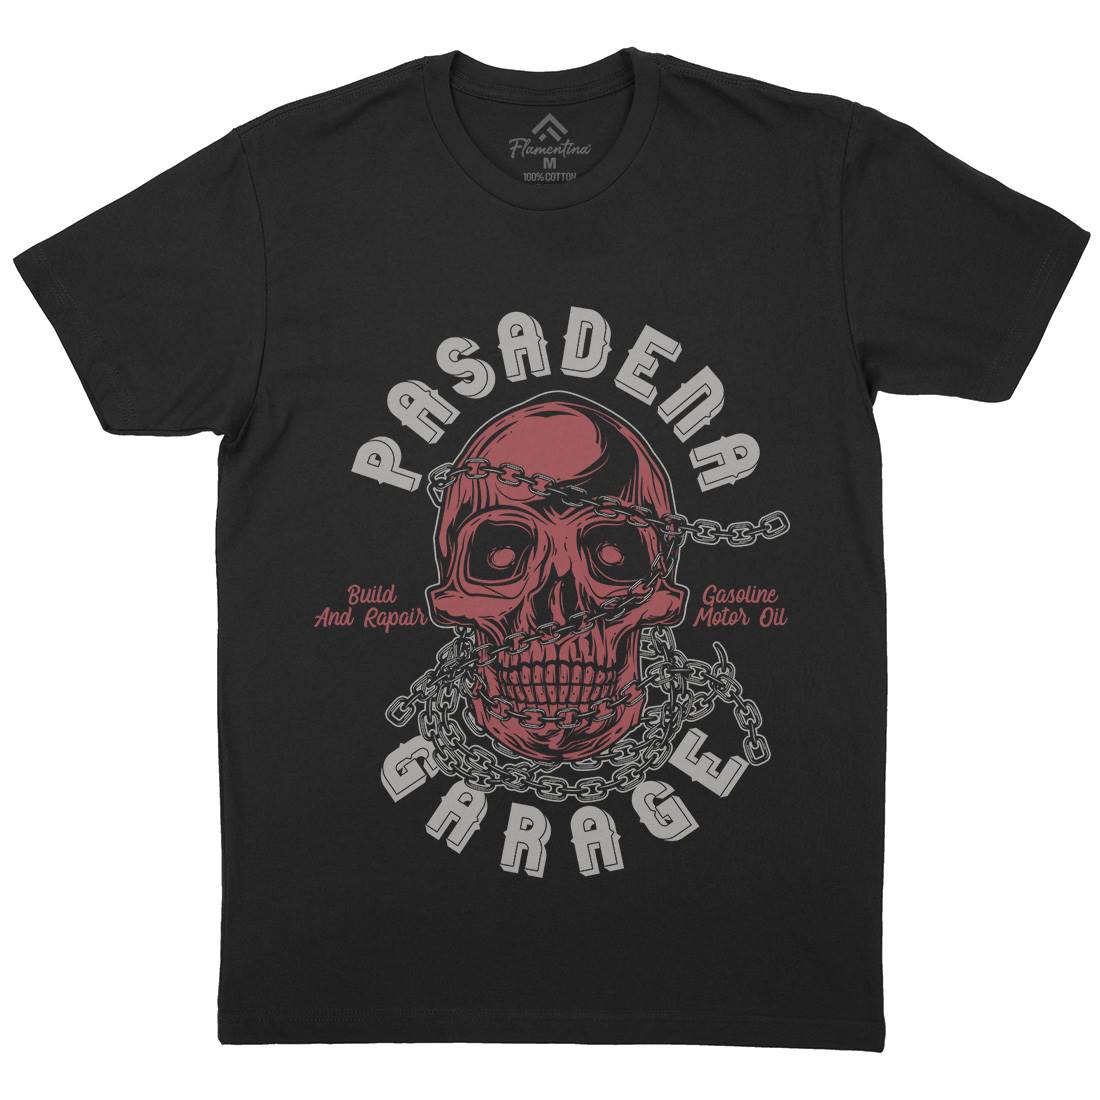 Pasadena Mens Crew Neck T-Shirt Motorcycles B847